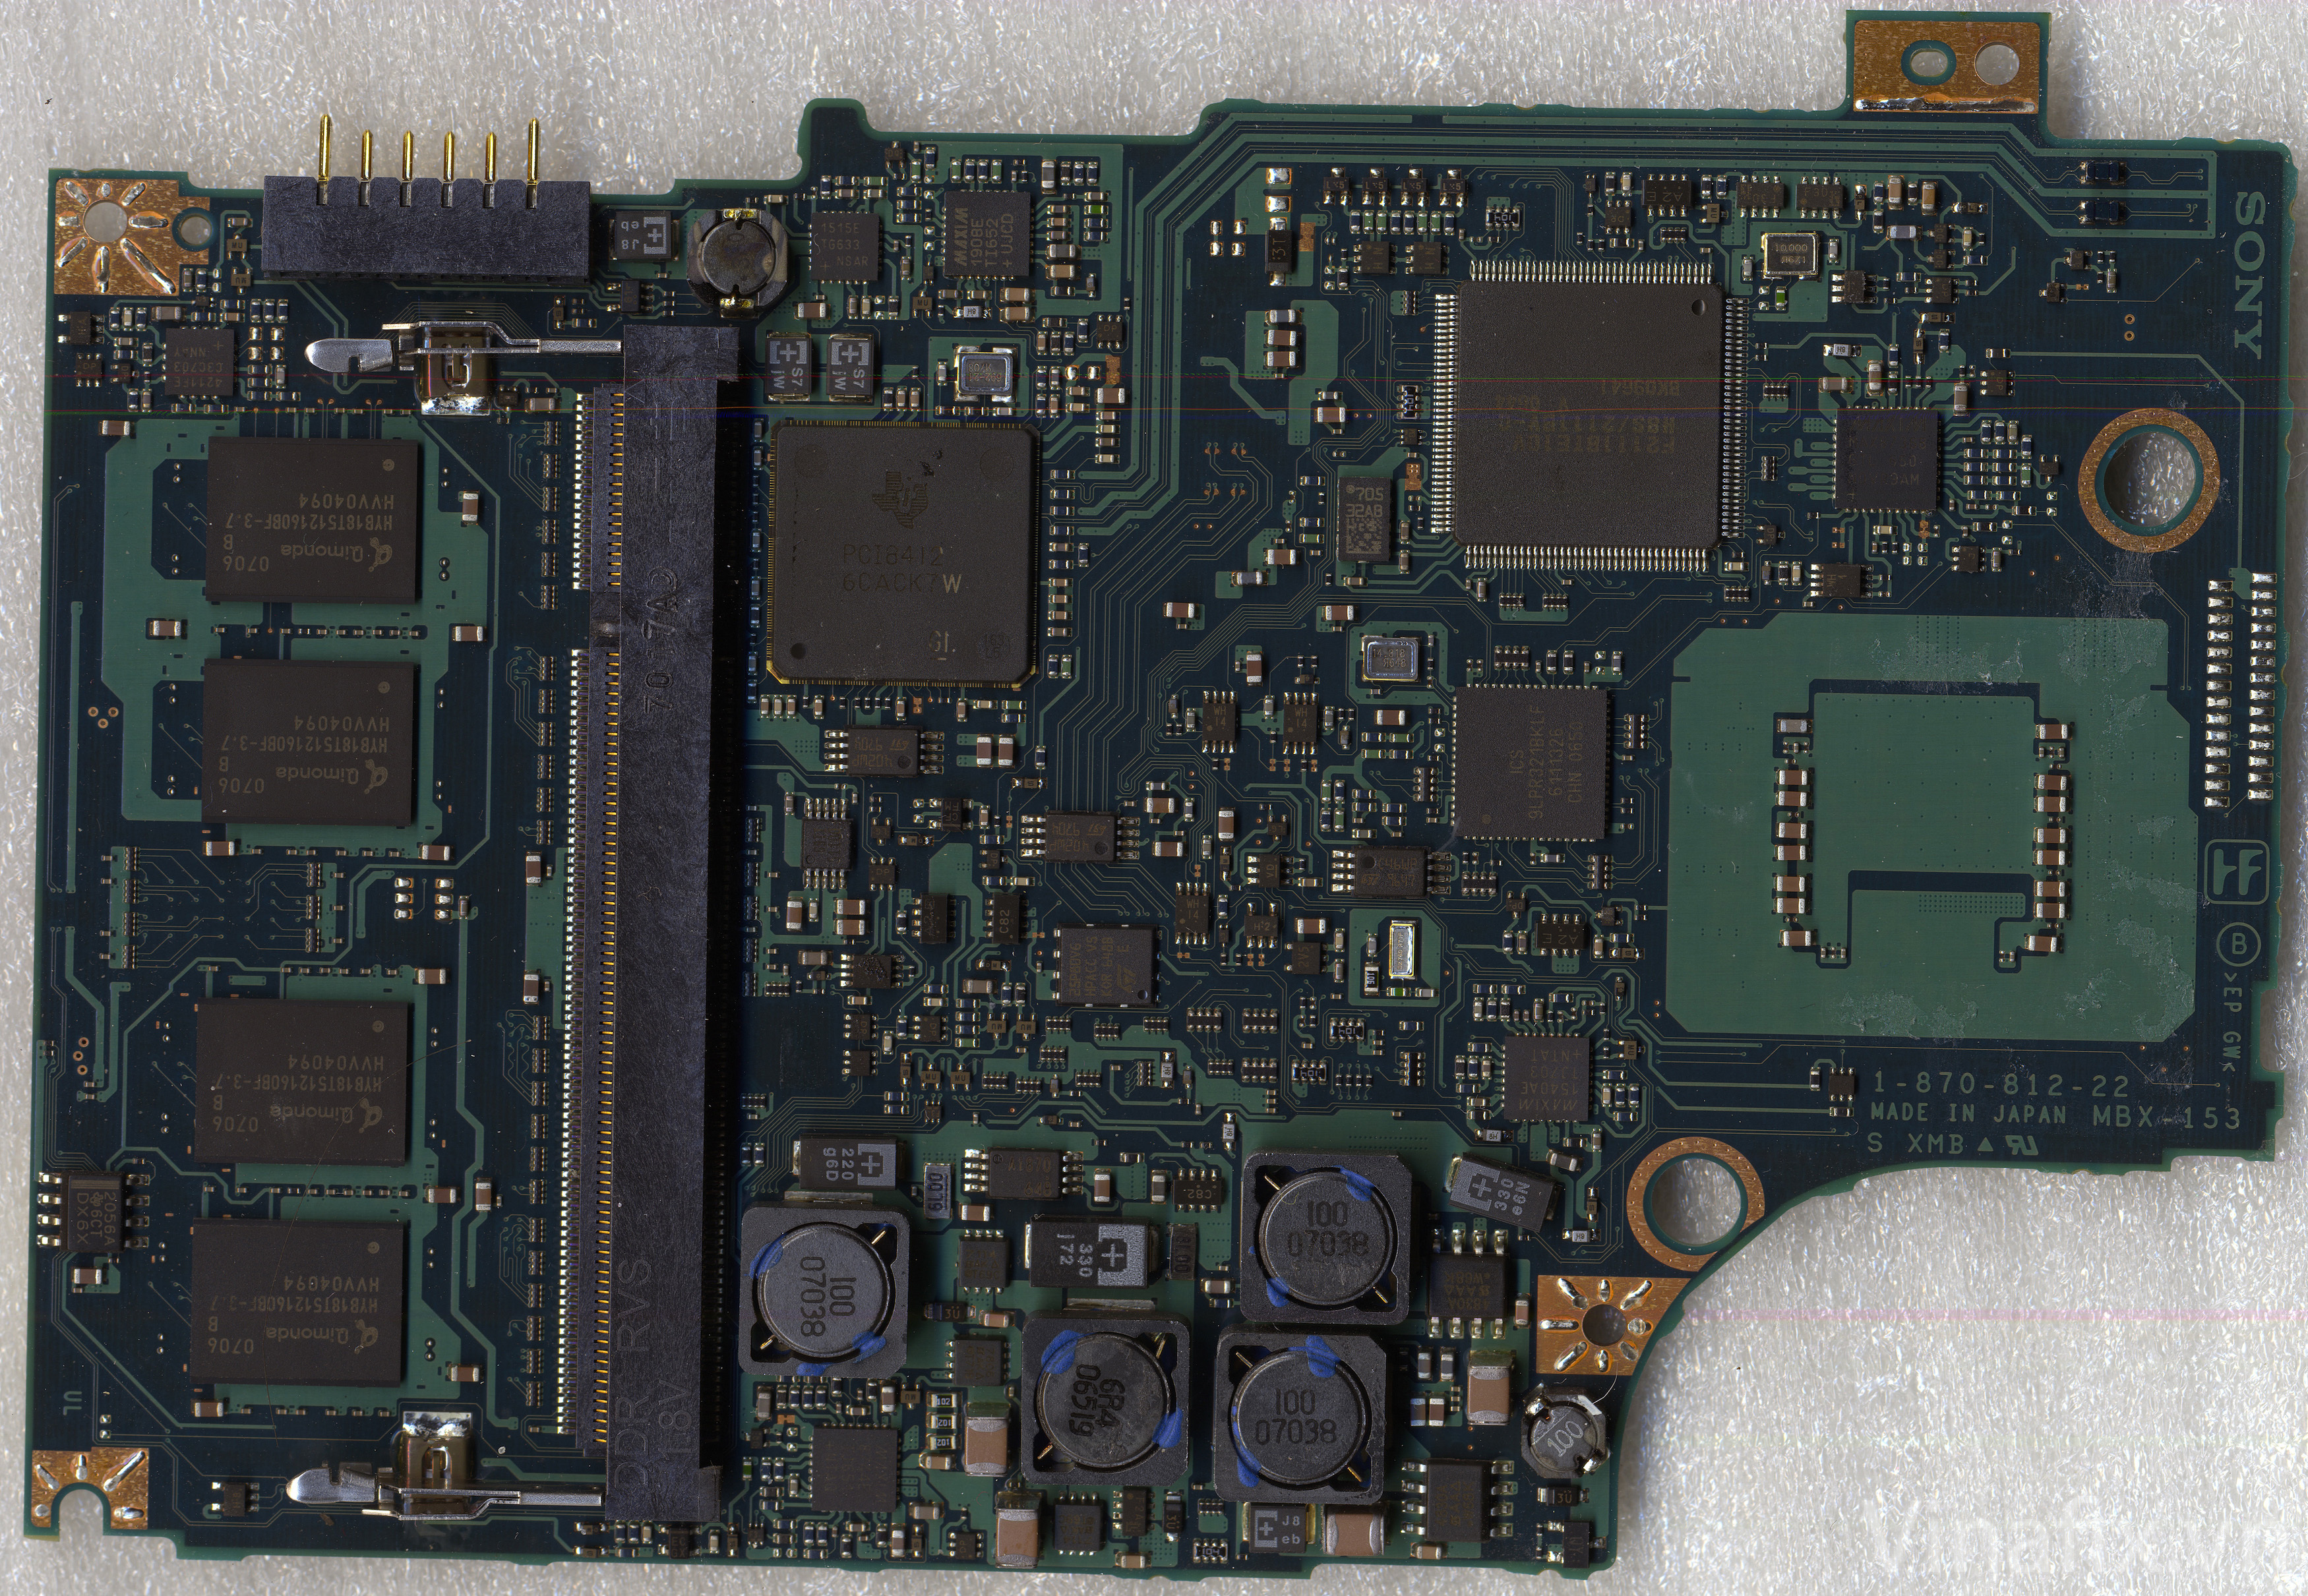 Sony VGN-TX5XRN (PCG-4K3P) MBX-153